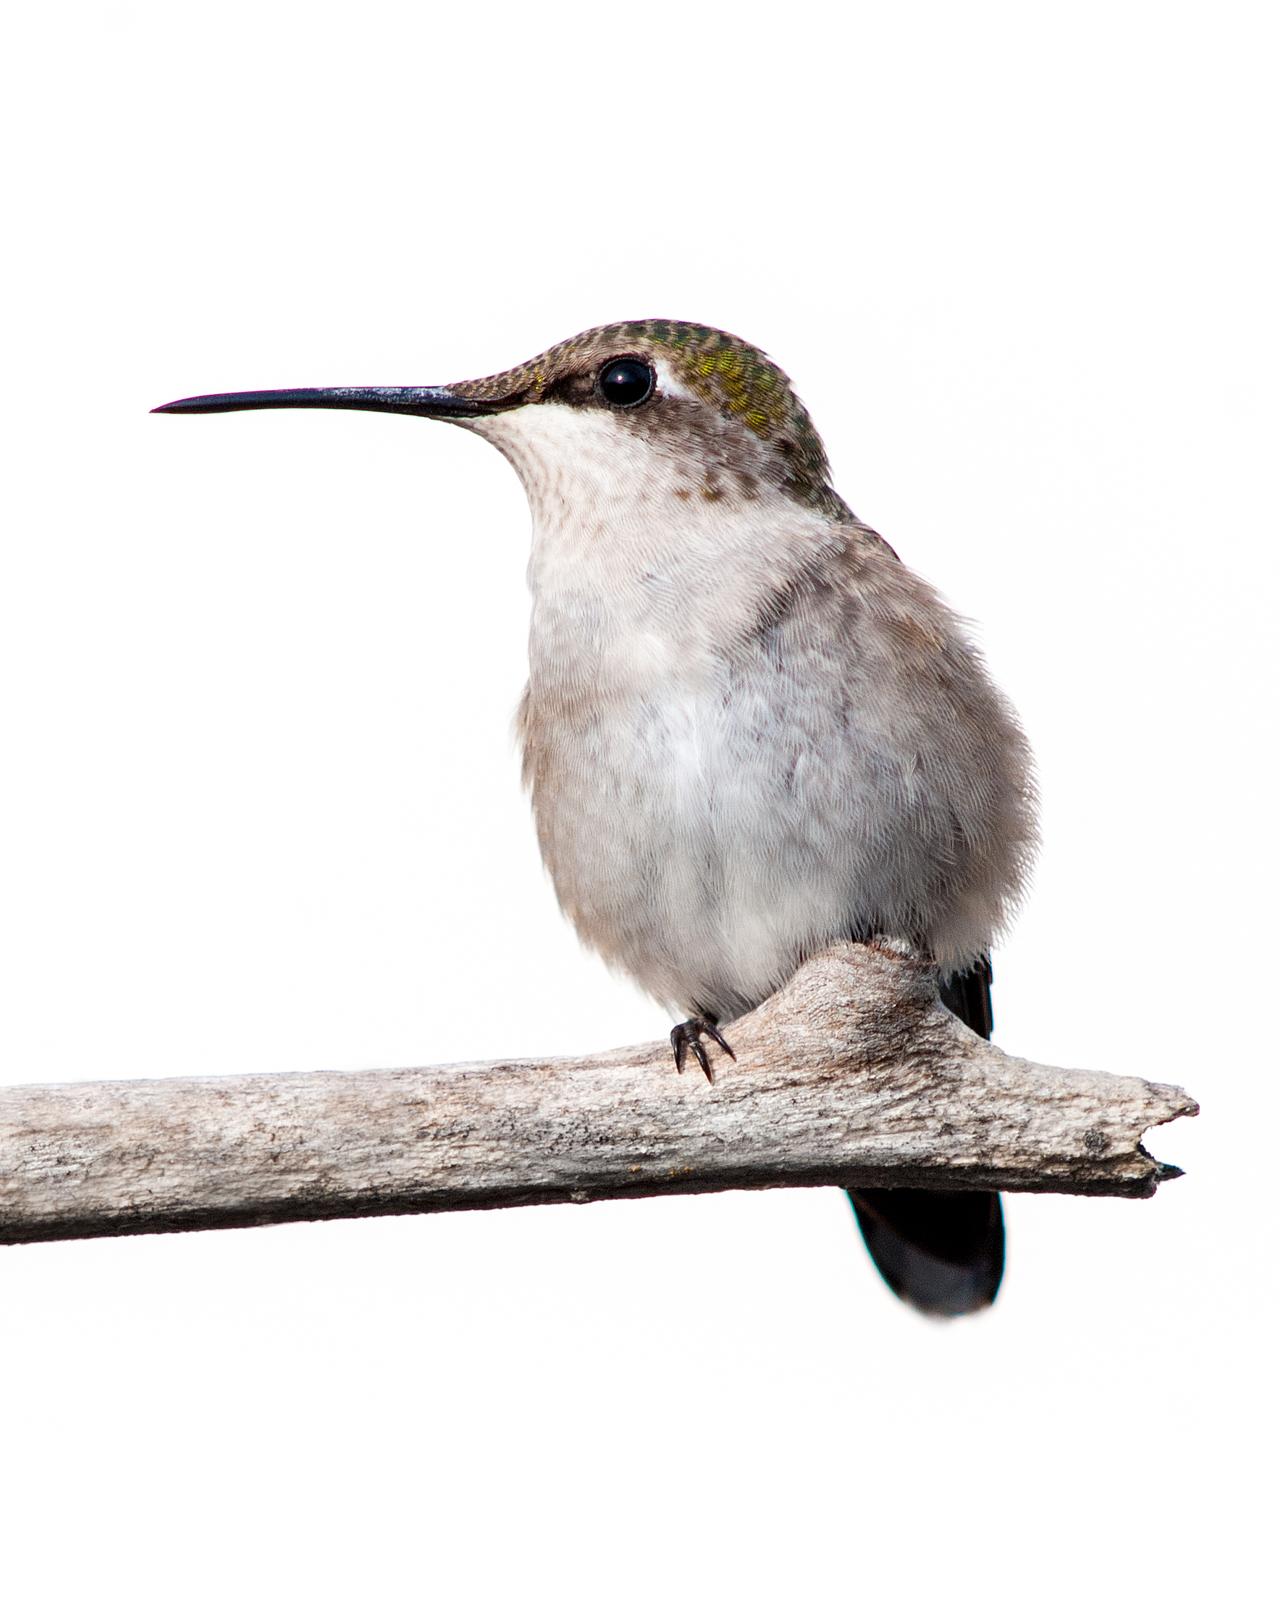 Ruby-throated Hummingbird Photo by Mark Blassage